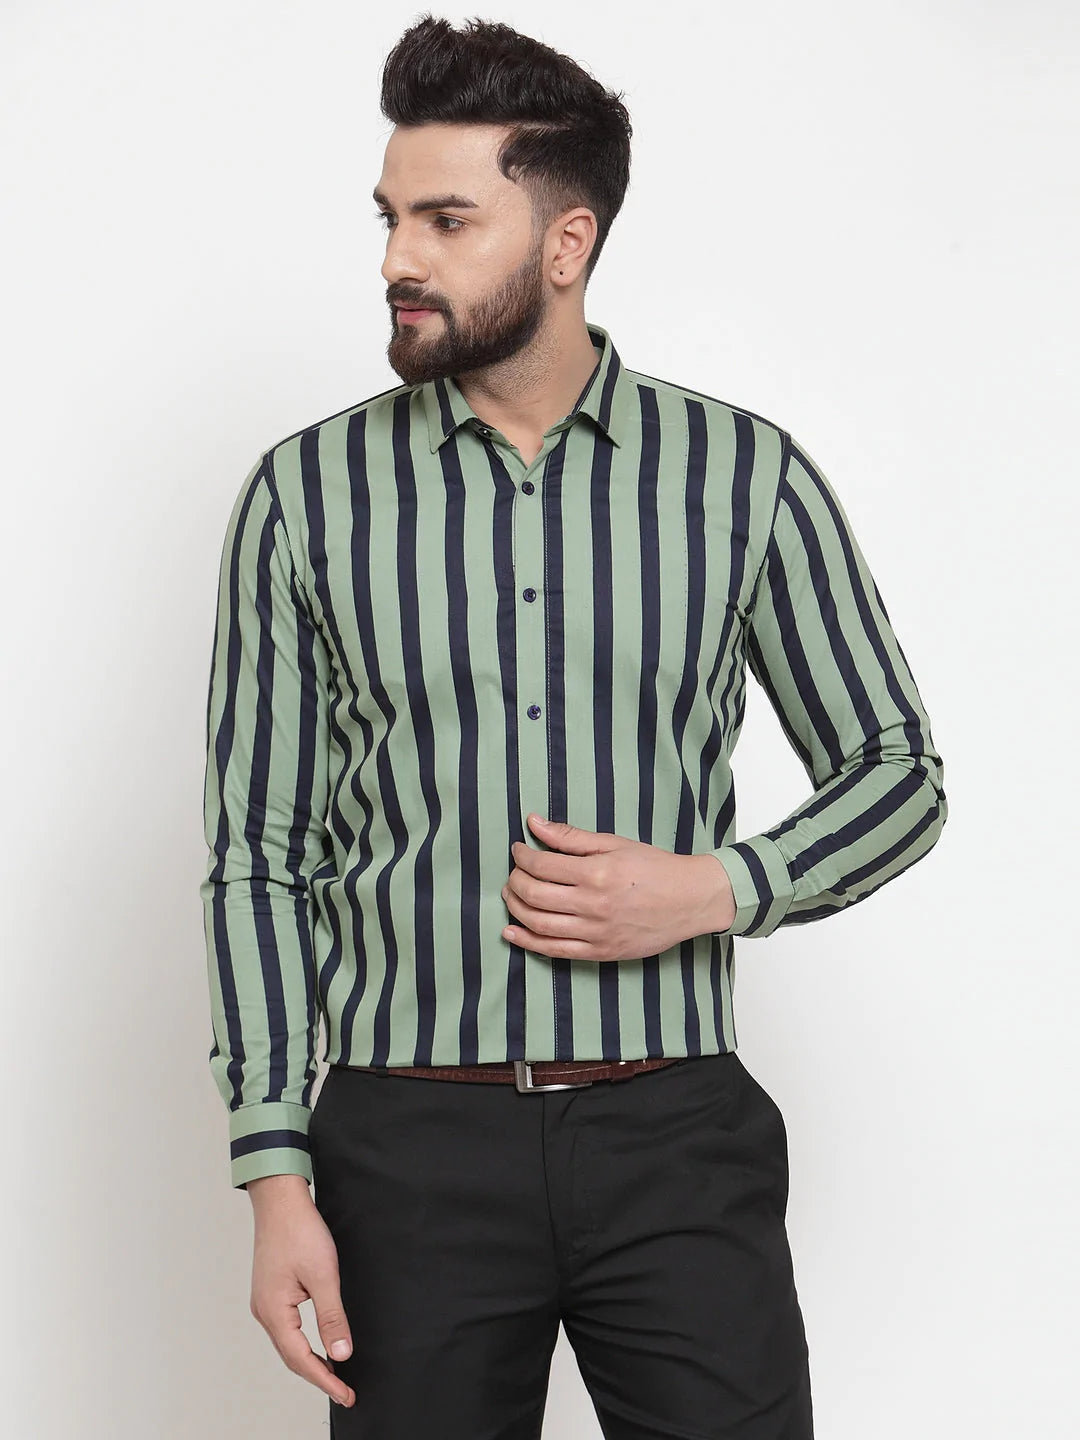 Jainish Green Men's Cotton Striped Formal Shirts ( SF 744Green )